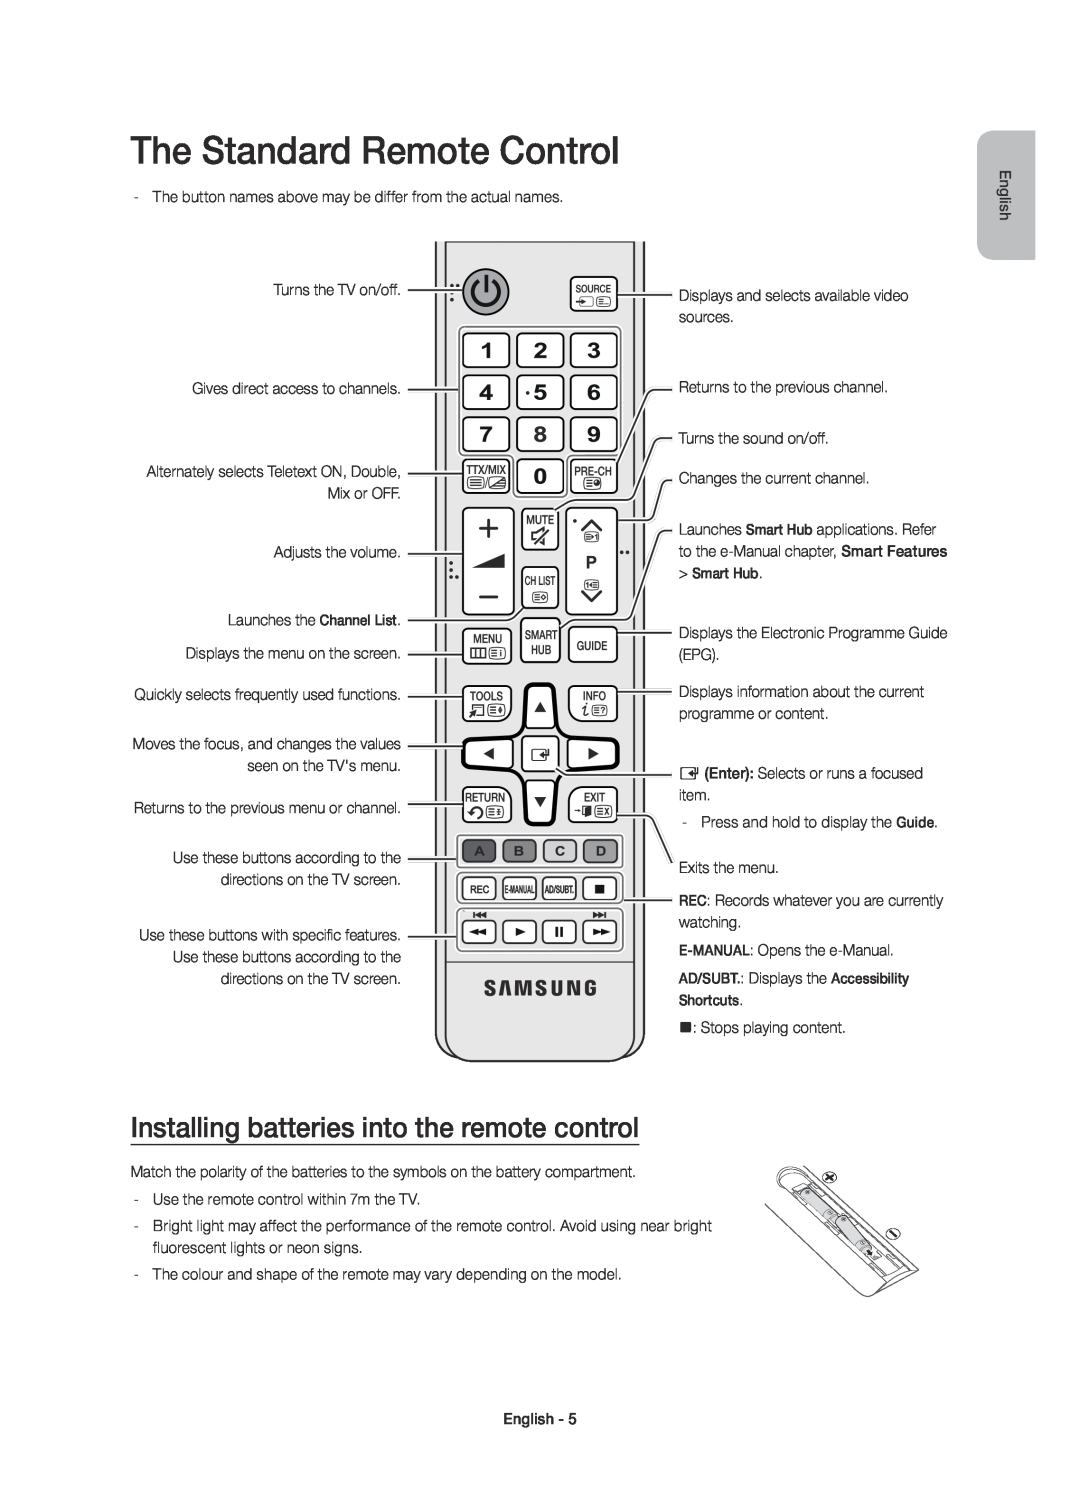 Samsung UE55JU6670SXXH, UE40JU6750UXZG manual The Standard Remote Control, Installing batteries into the remote control 